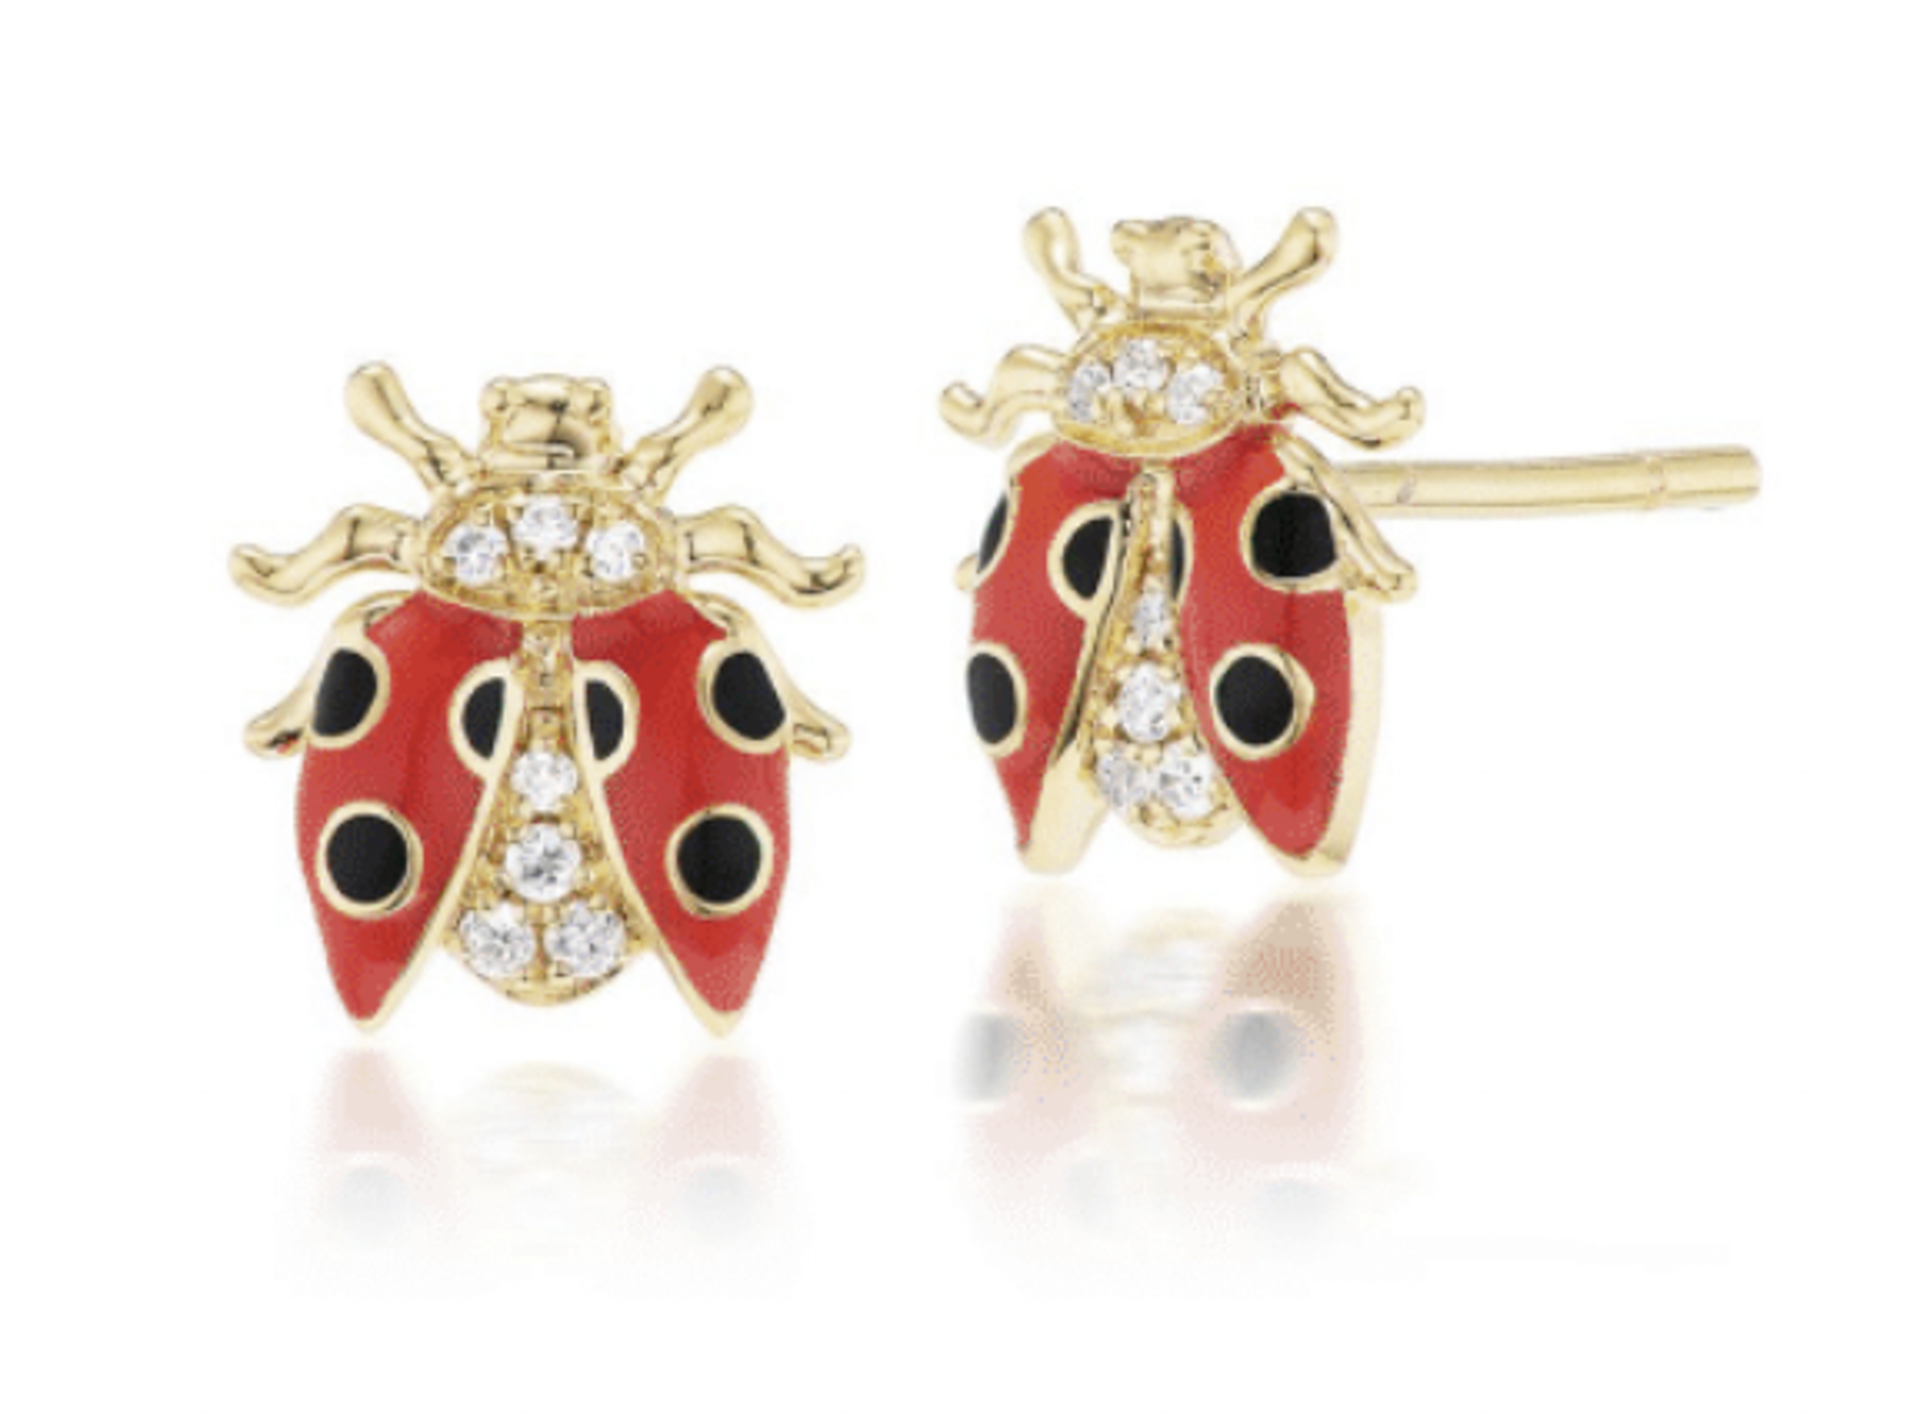 Ladybug Stud Earrings by Ana Katarina